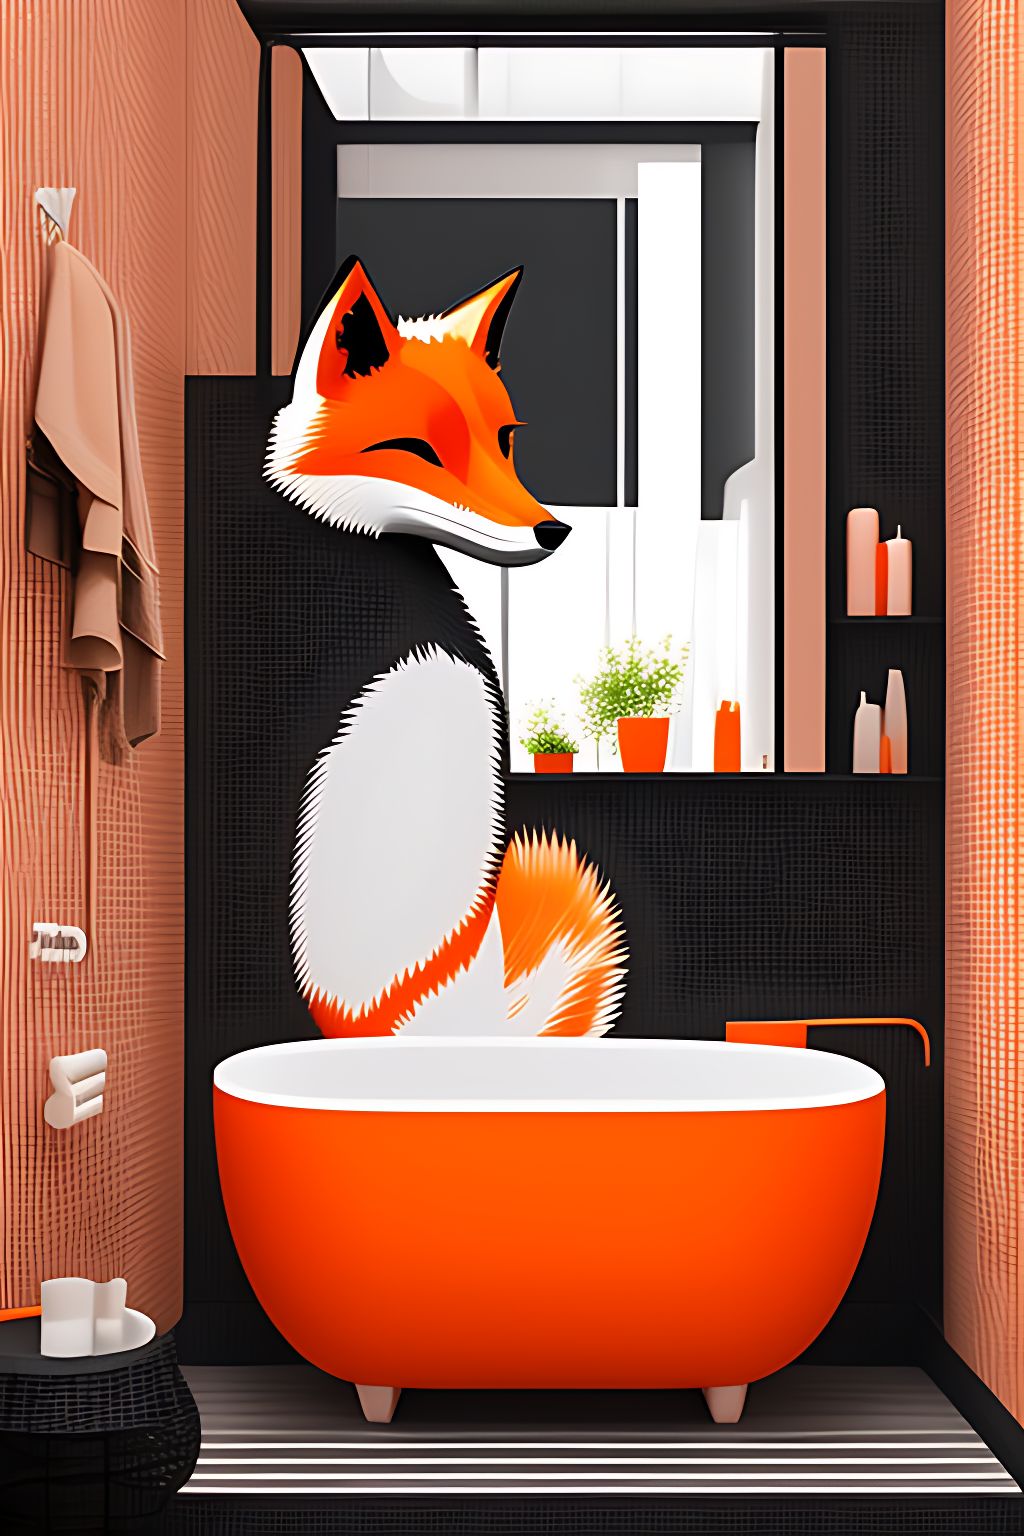 joo'hanlon: Outlined illustration of A fox in a bathtub in a New York City  apartment bathroom